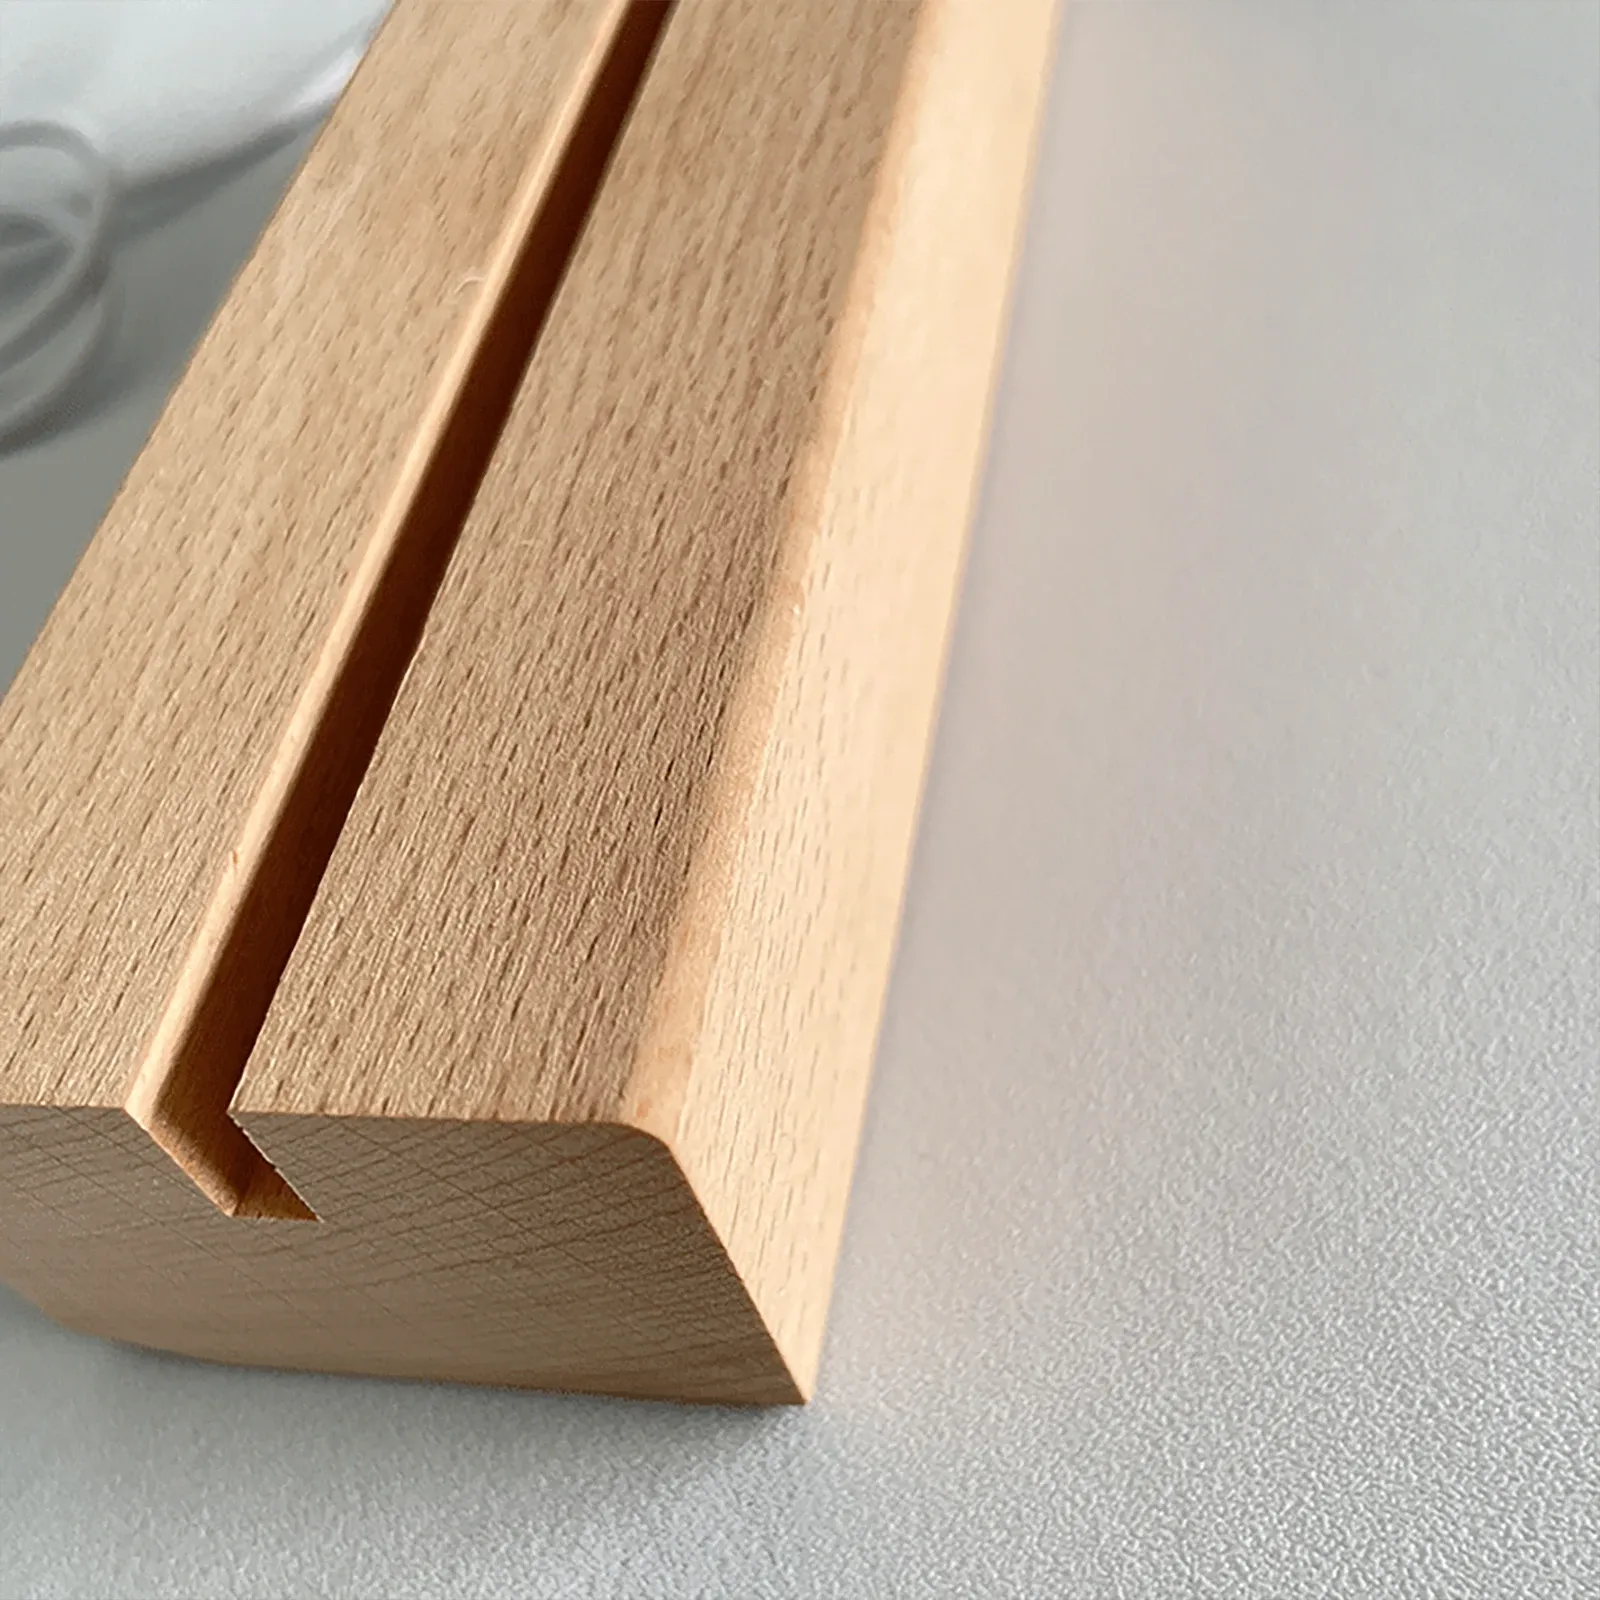 1-10 pezzi Luce in legno Display in legno Baso illuminato in legno Baso di luce acrilica Base in legno in legno USB per luce artistica in resina